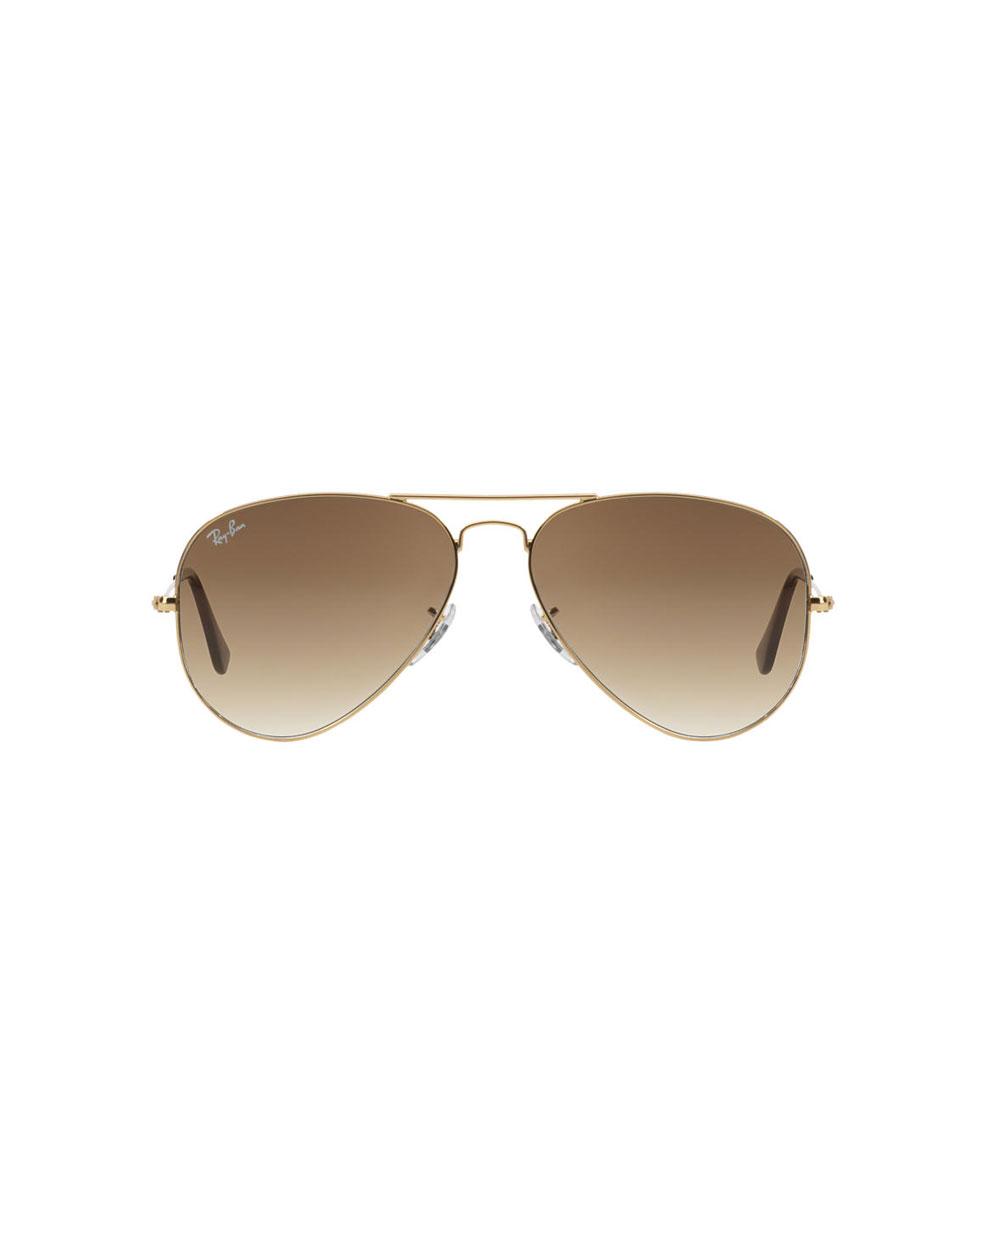 Rayban Aviator sunglasses from Sunglass Hut